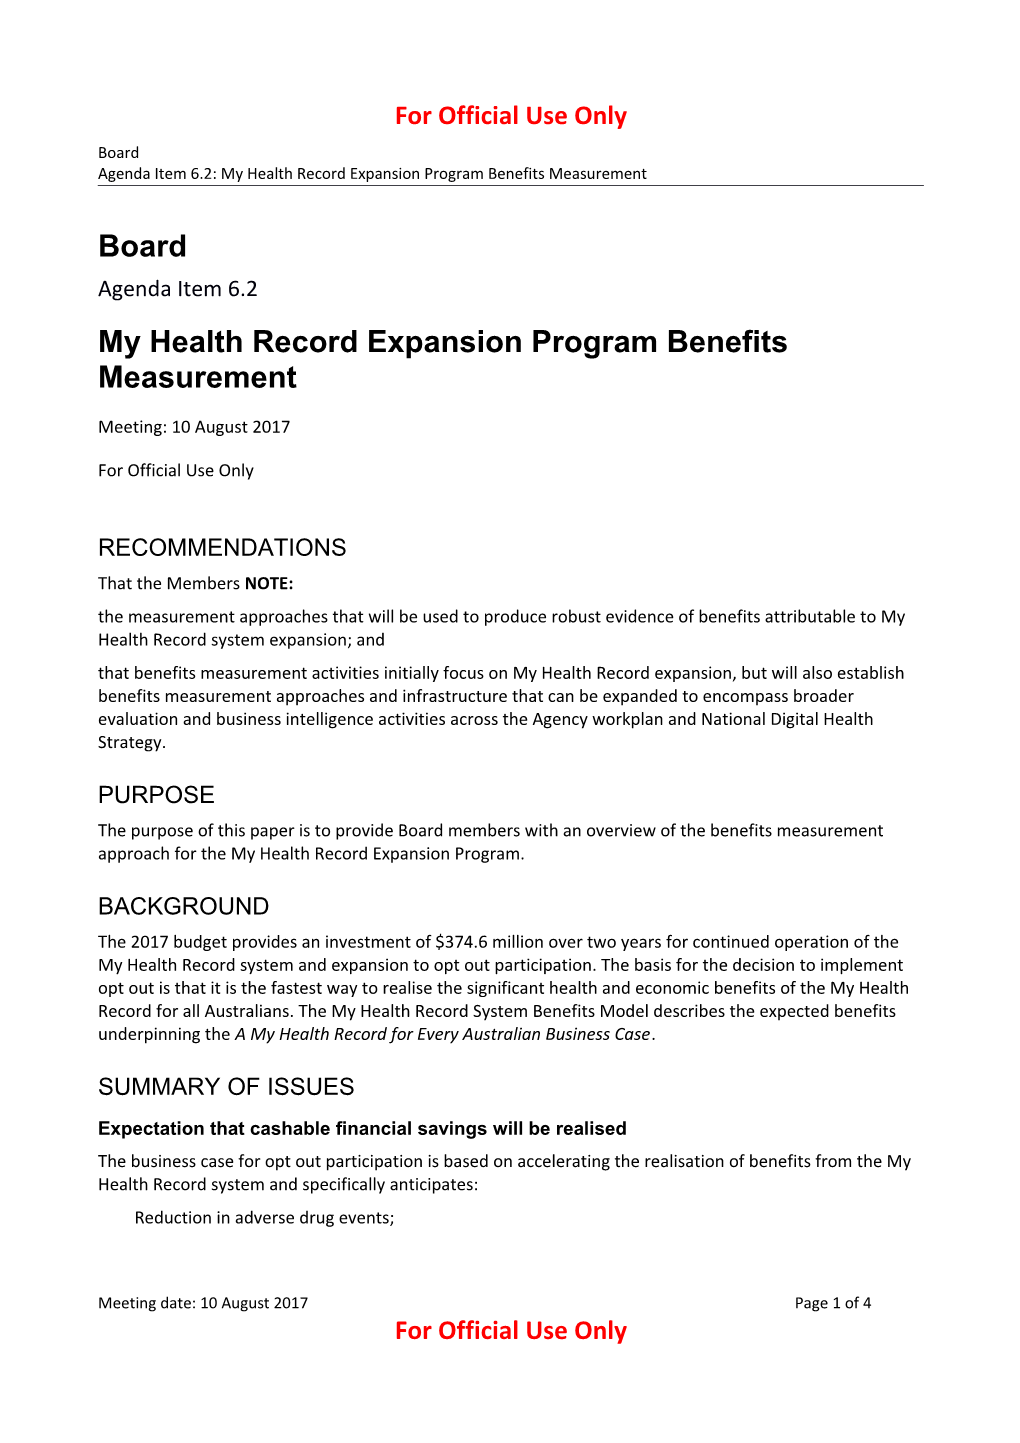 My Health Record Expansion Program Benefits Measurement